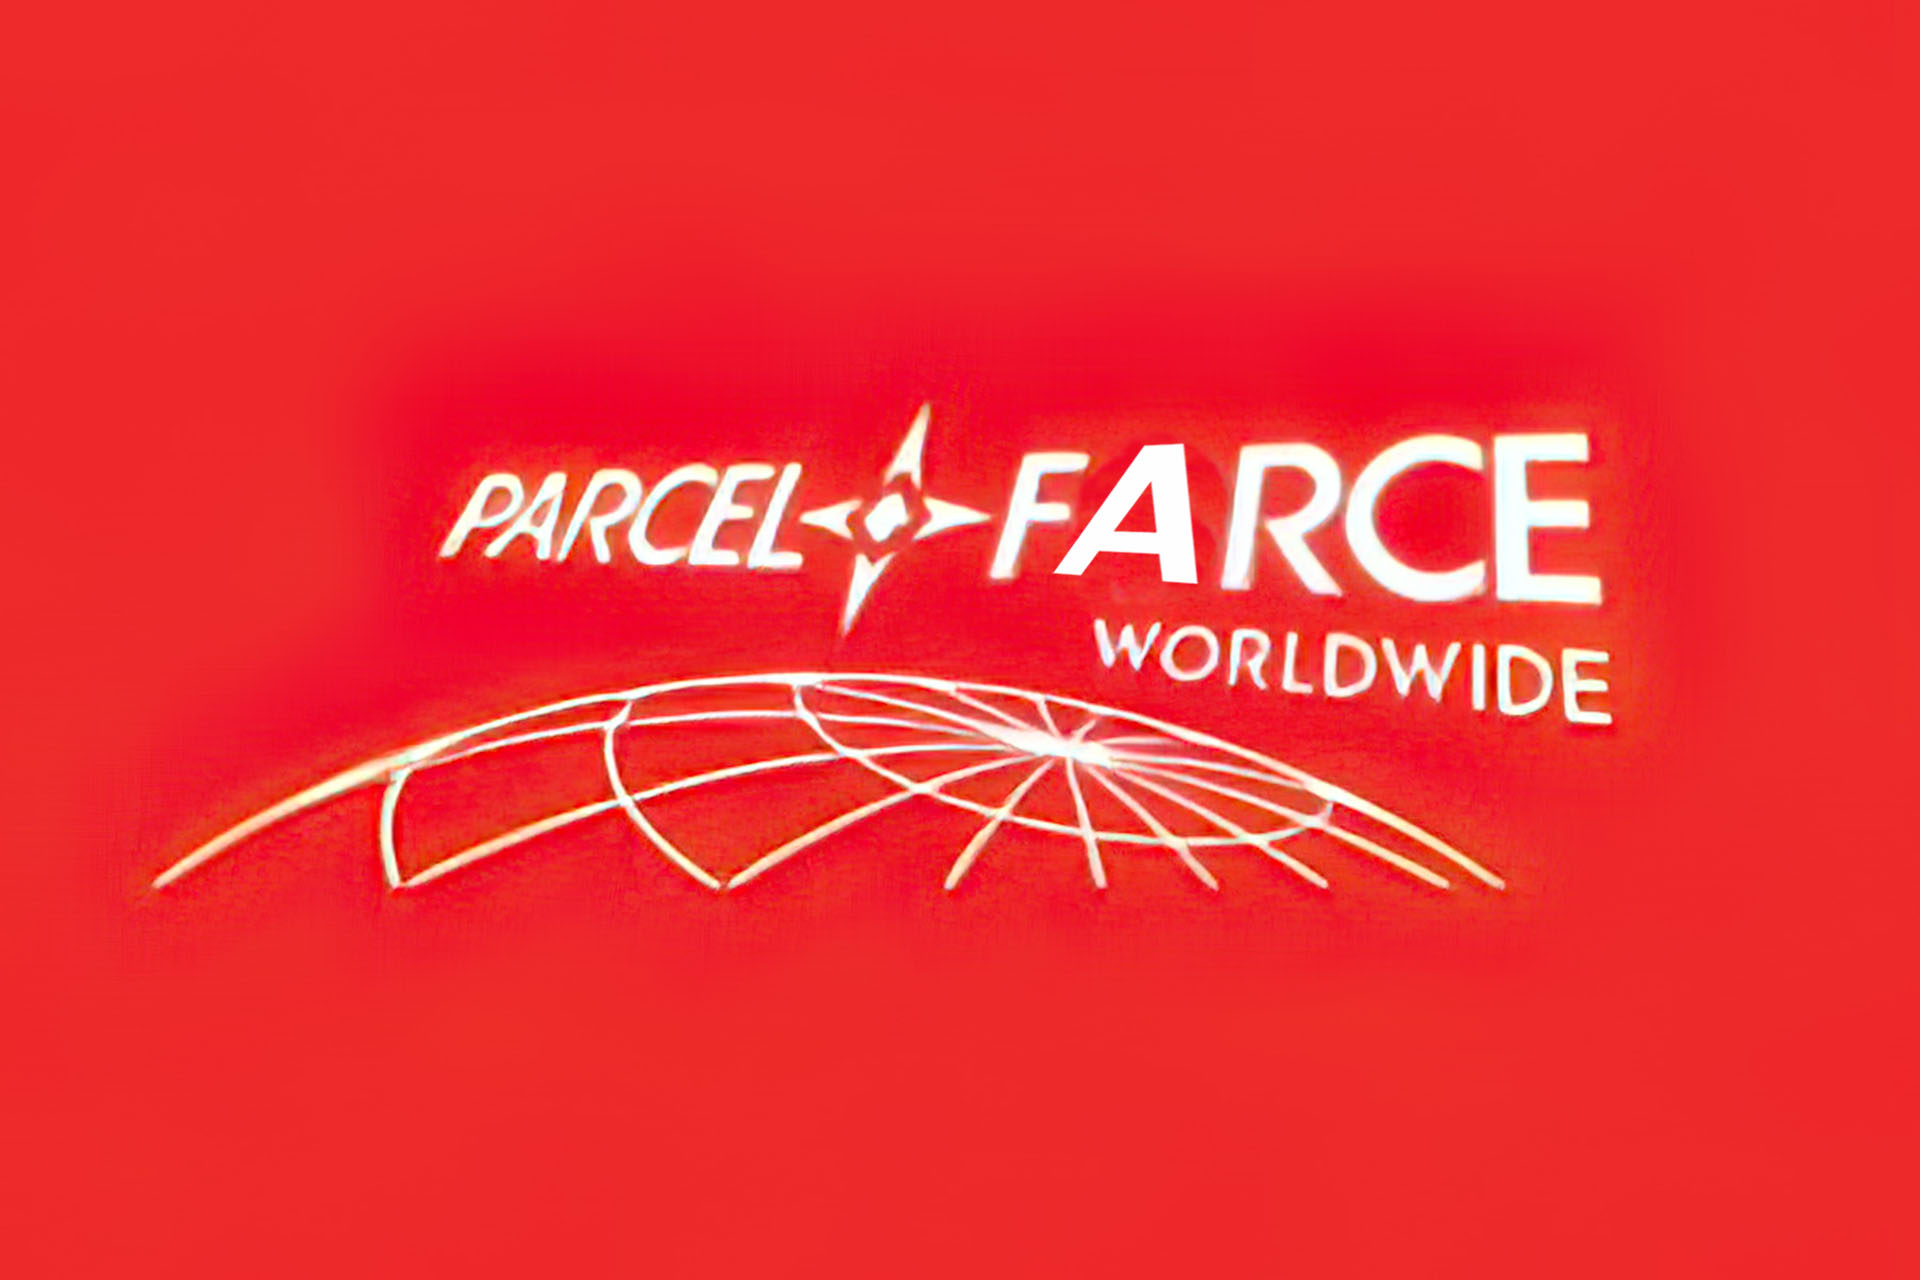 ParcelForce or ParelFarce